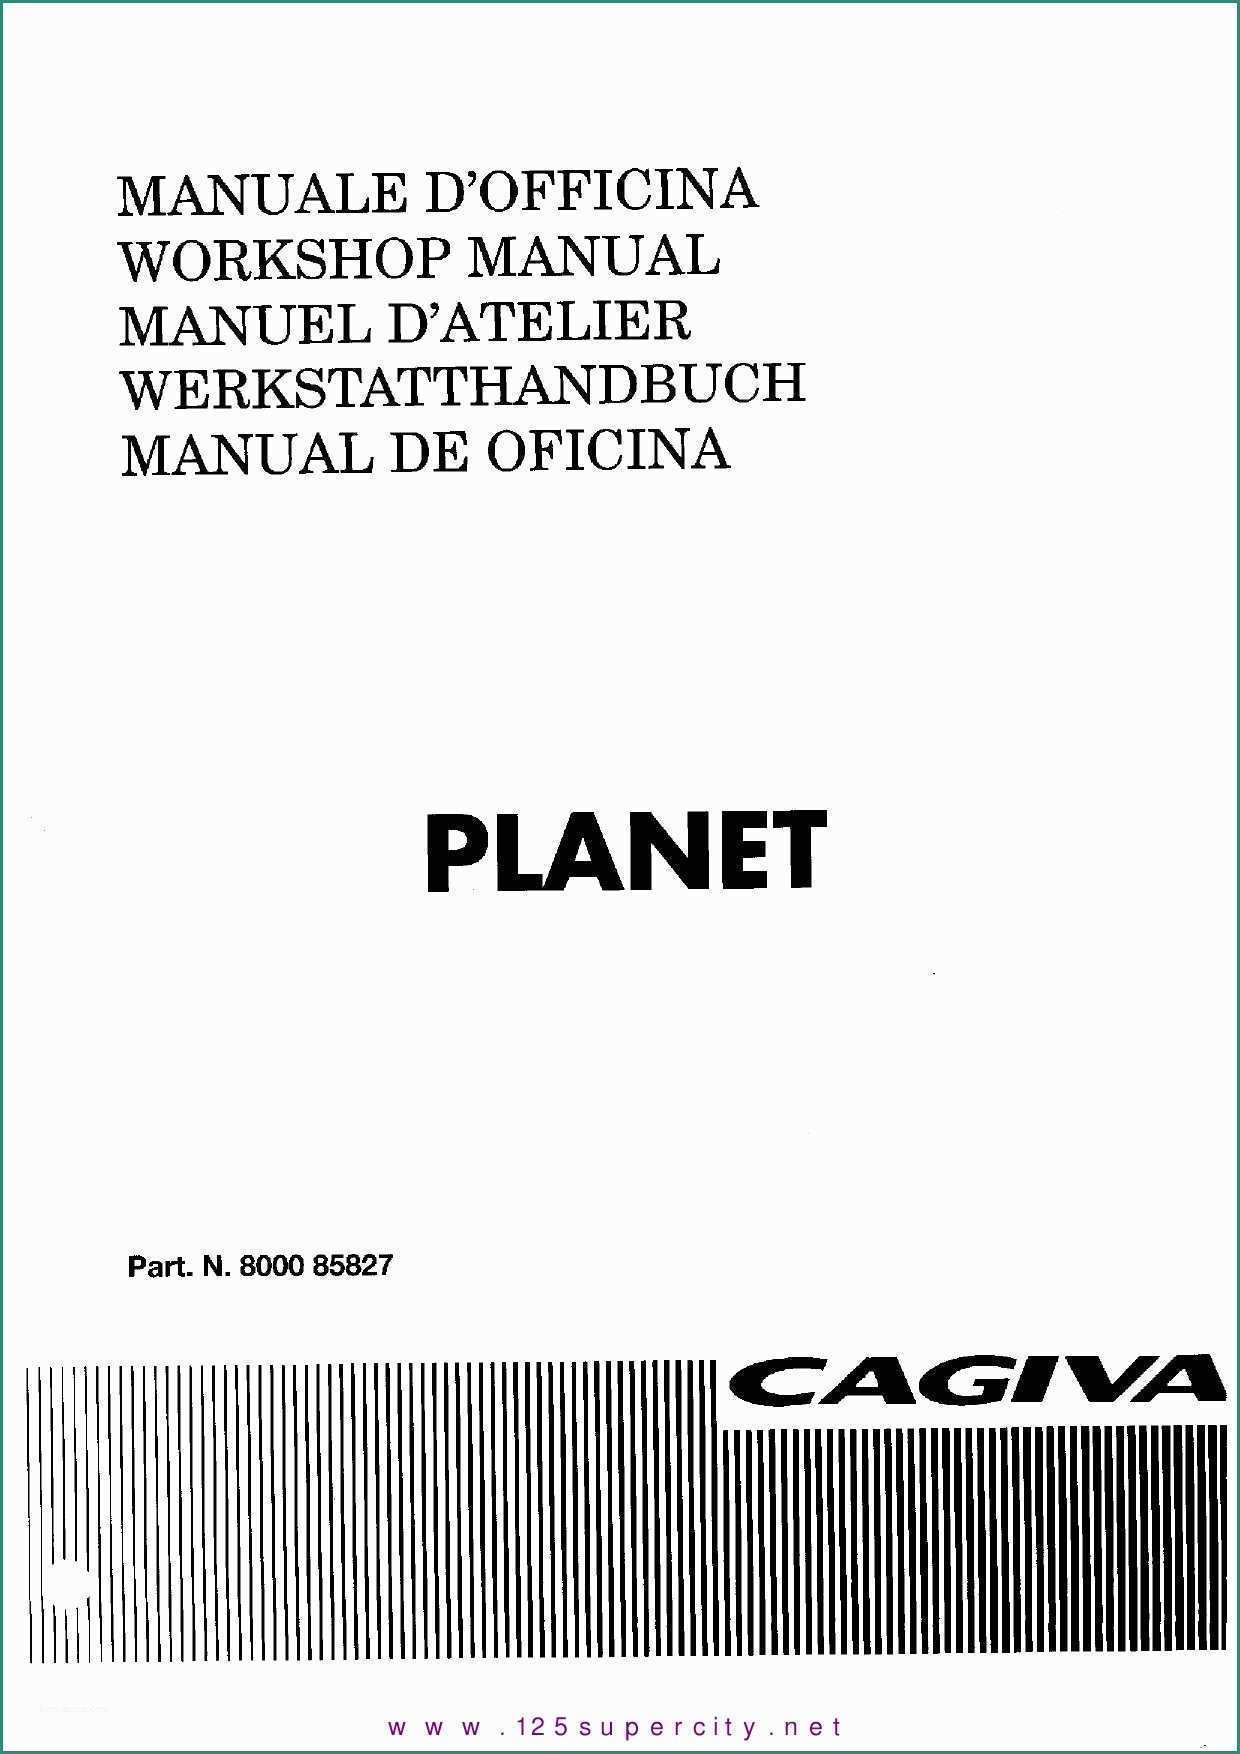 Pressa Idraulica Manuale Usata E Manual Cagiva Planet by Christ Cfouq issuu